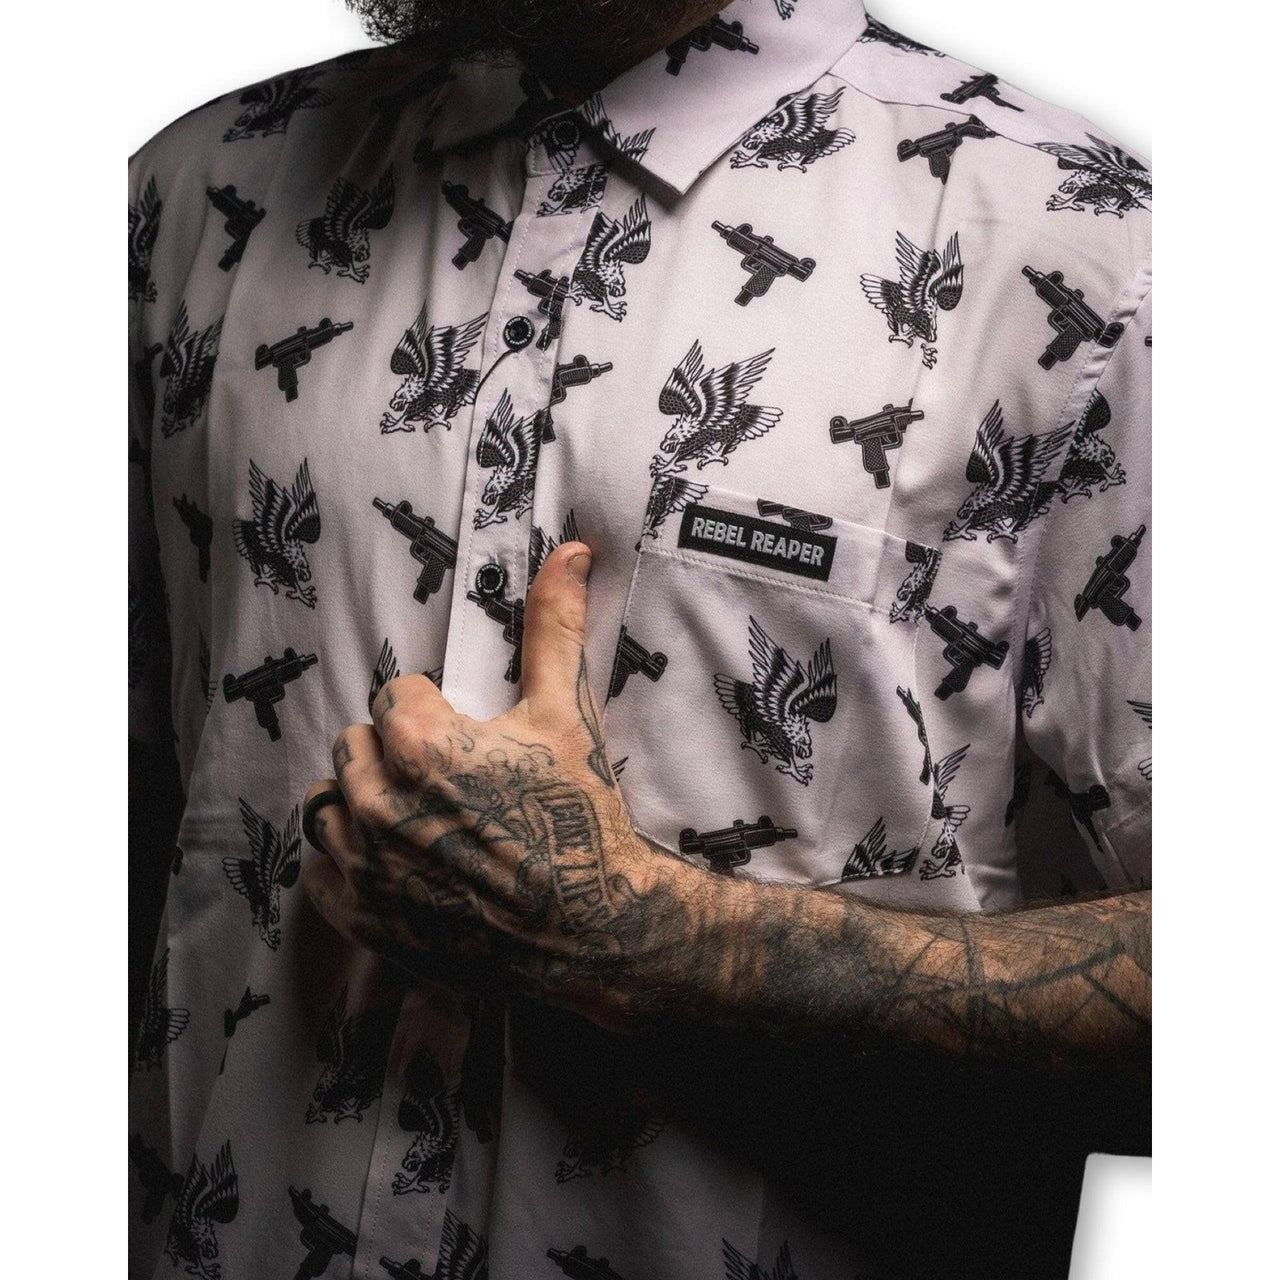 Uzi's & Eagle's Shirt - Rebel Reaper Clothing Company Button Up Shirt Men's